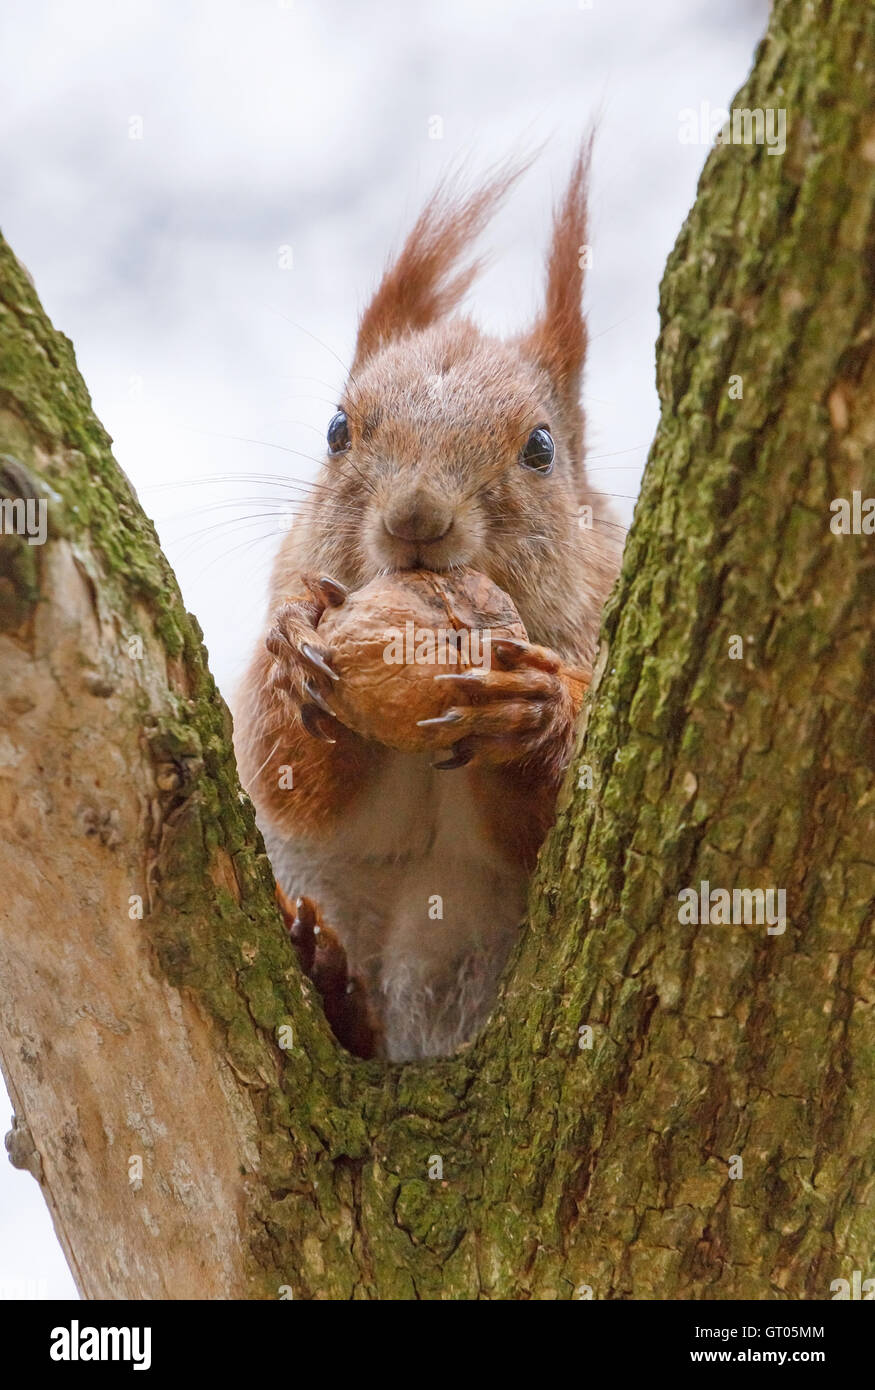 Close up of squirrel manger noyer Banque D'Images